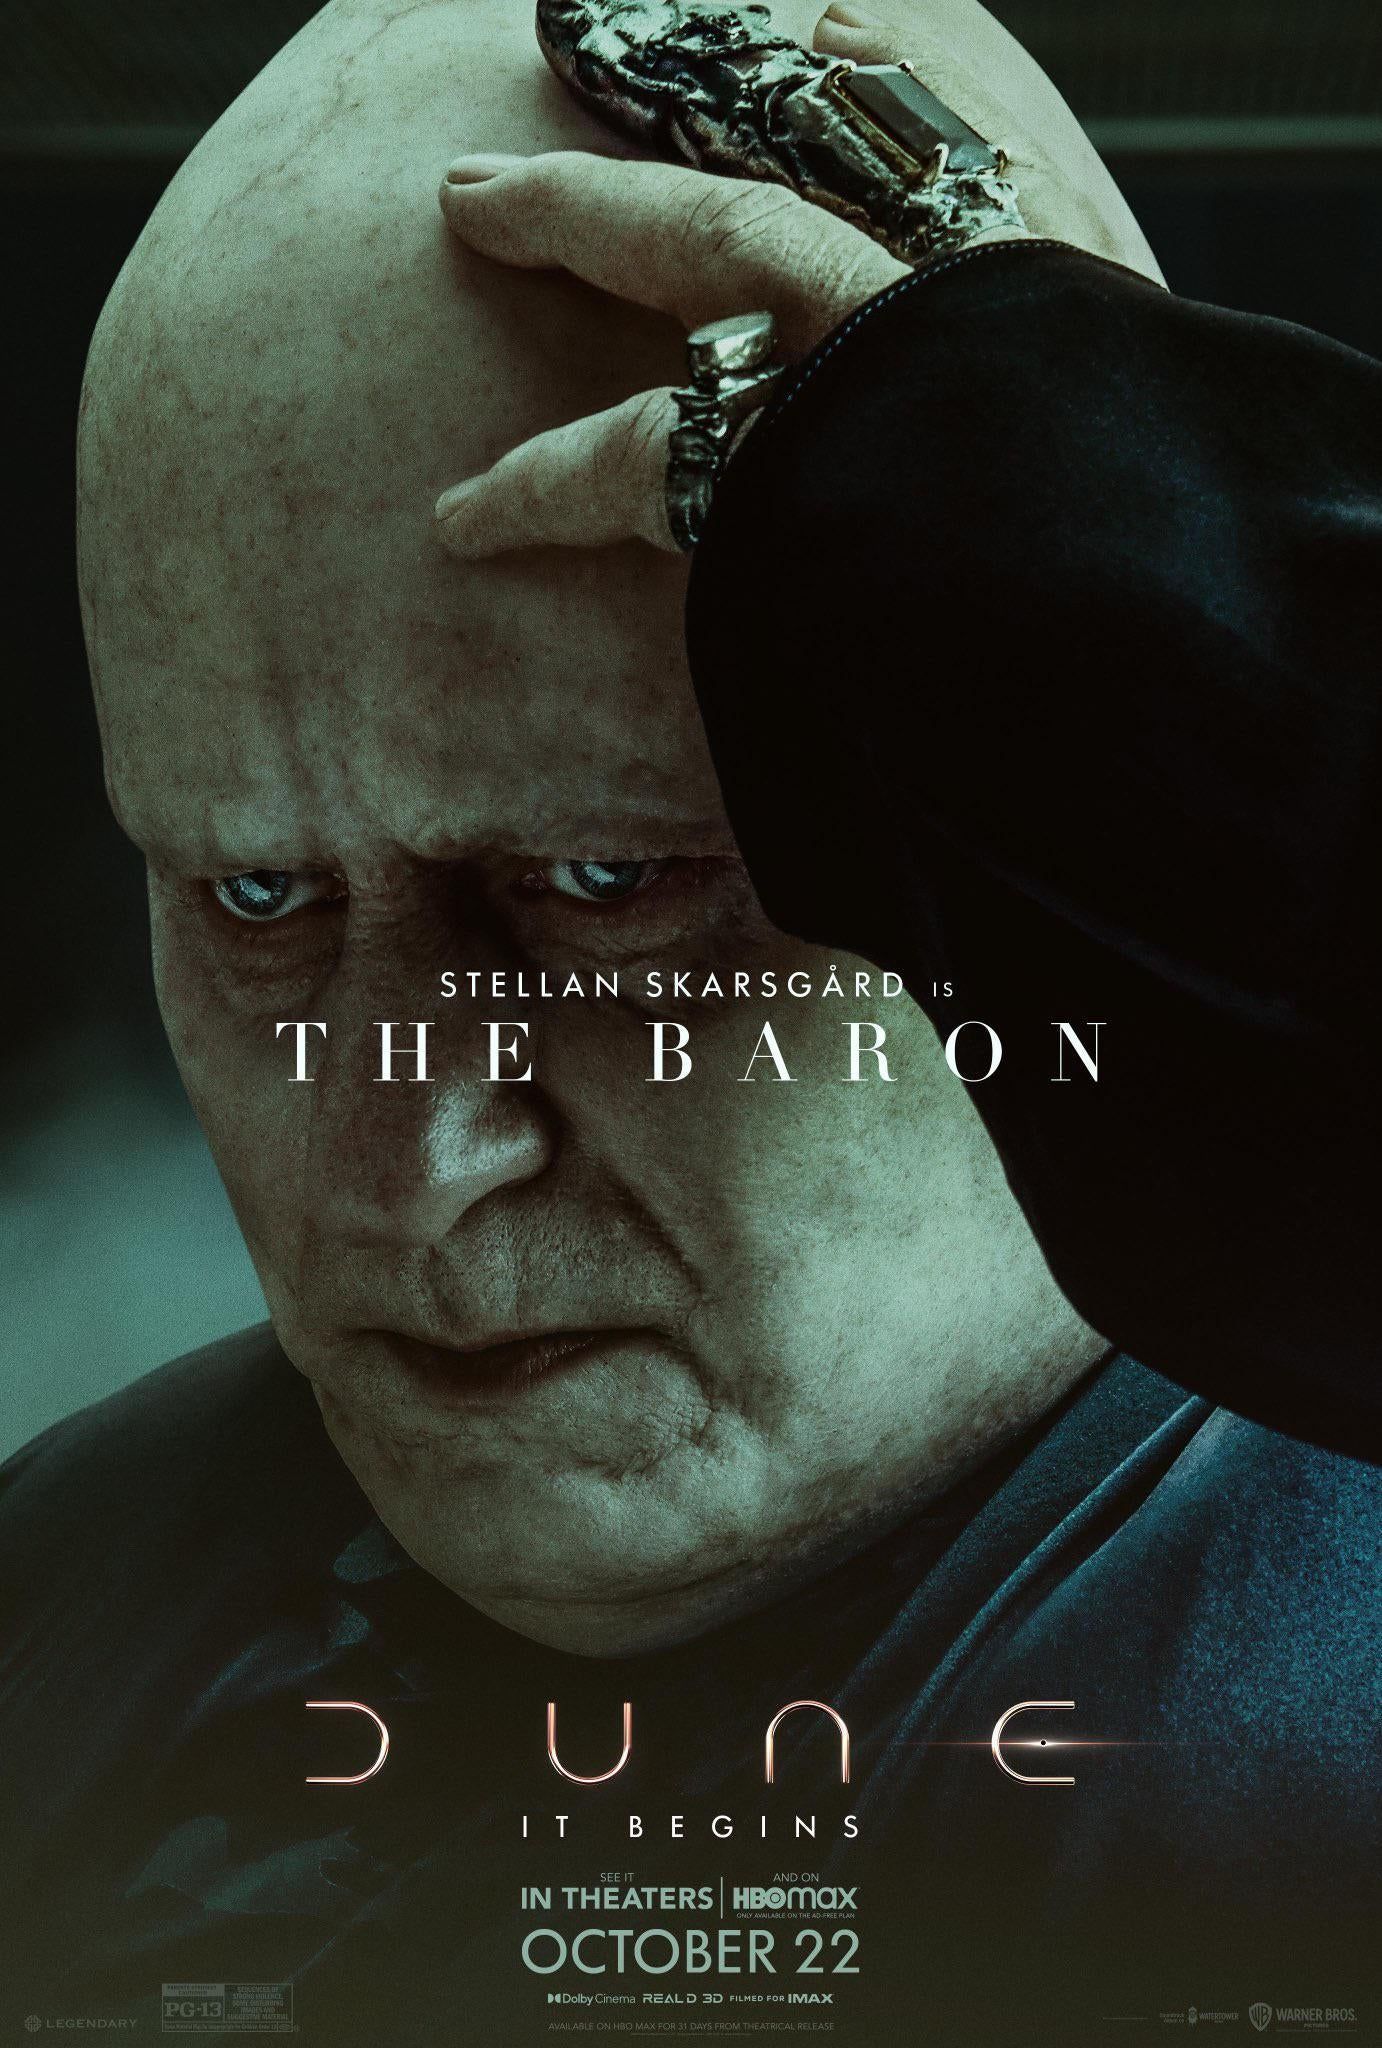 Baron Harkoneen character poster from Dune